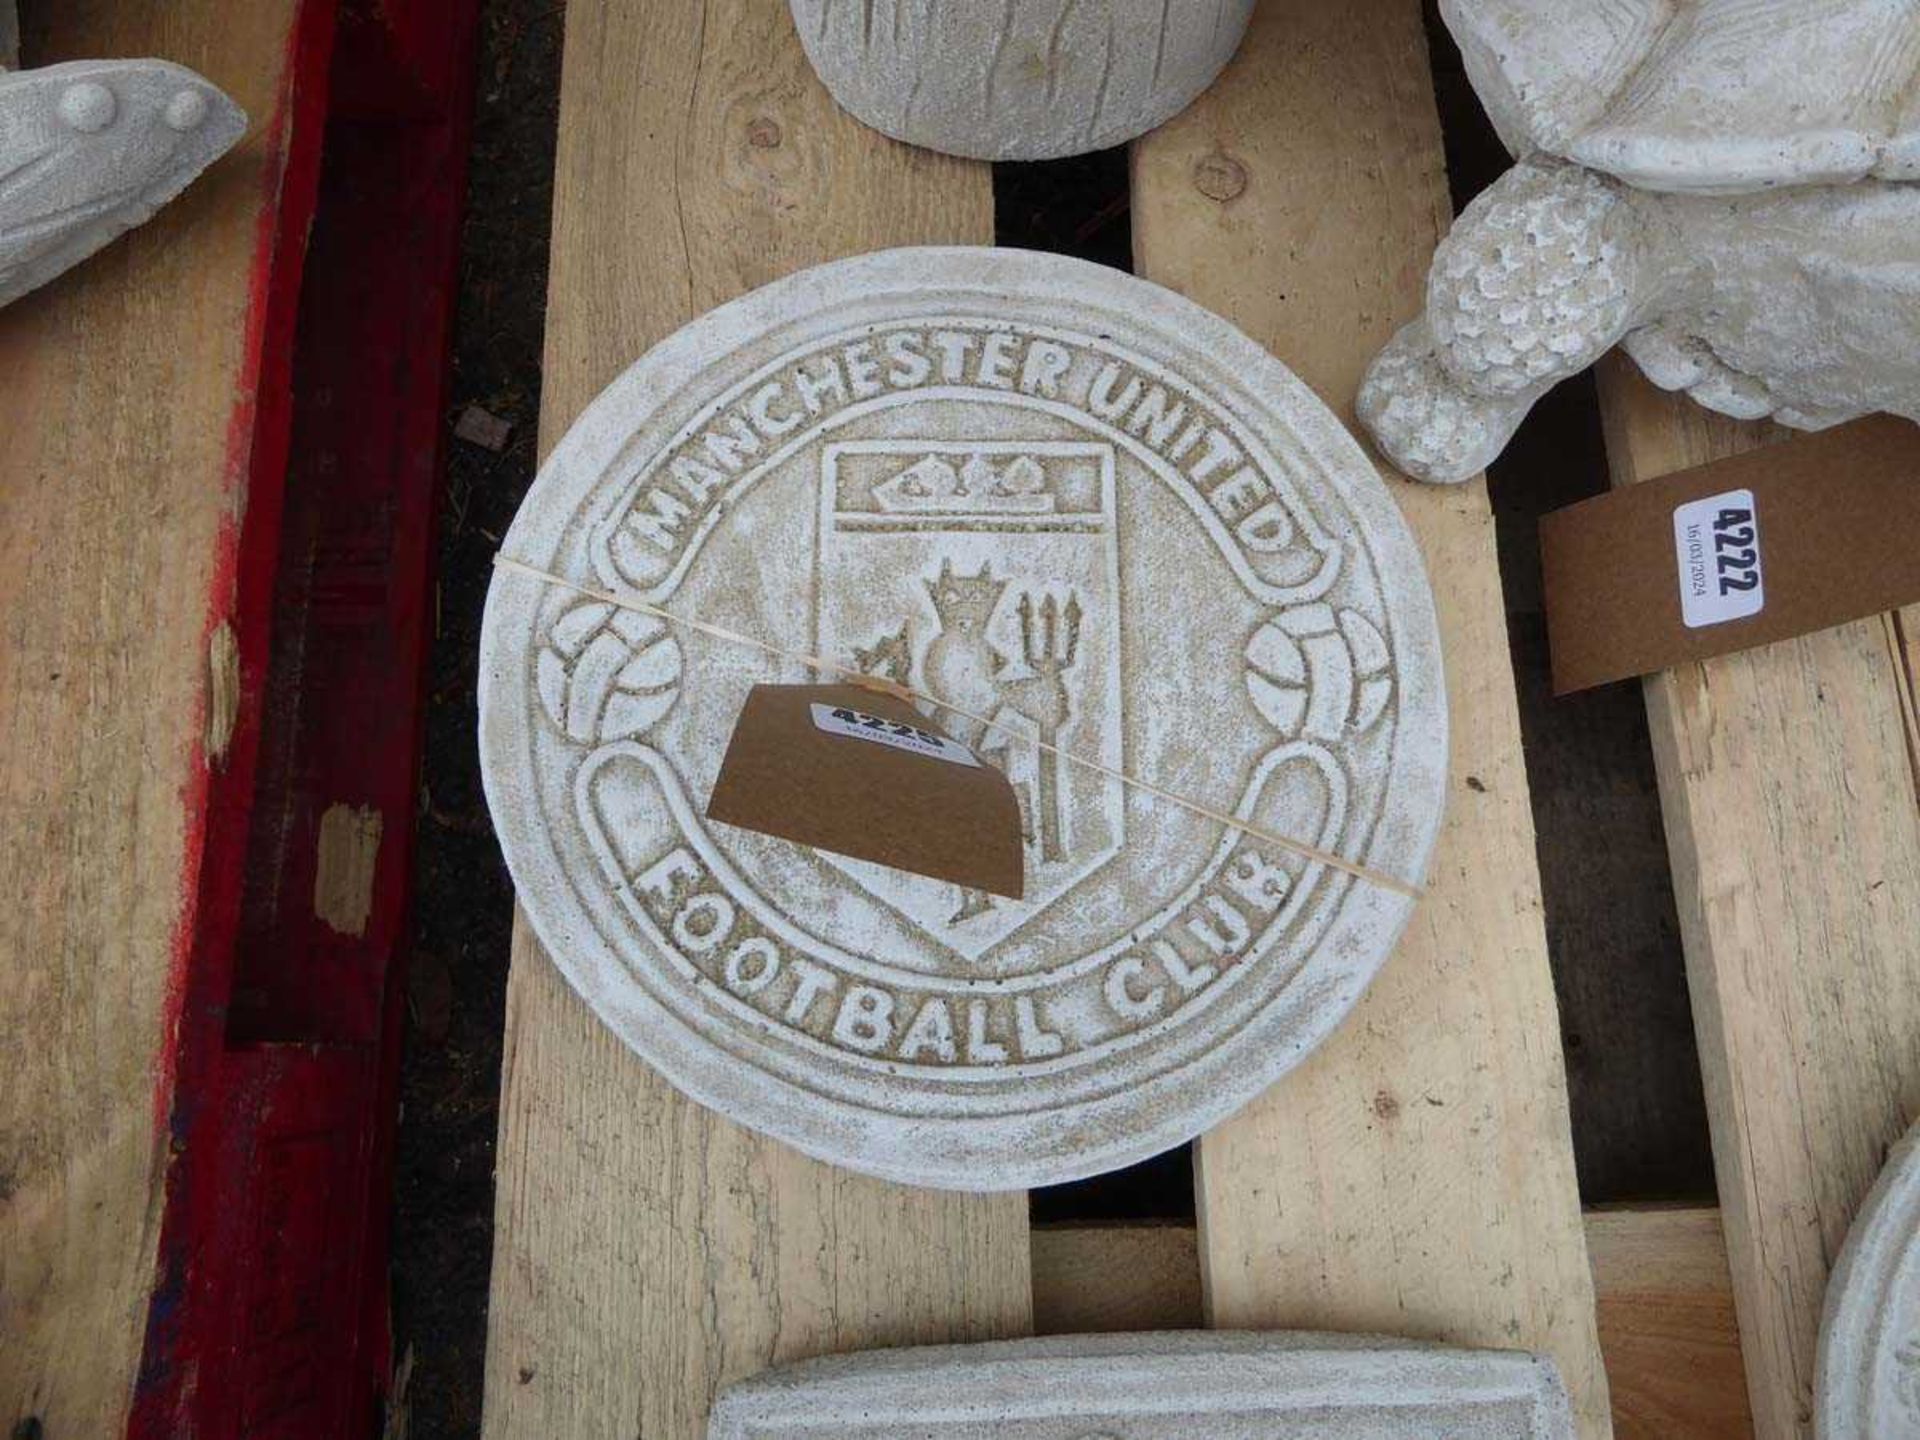 Concrete Manchester United plaque